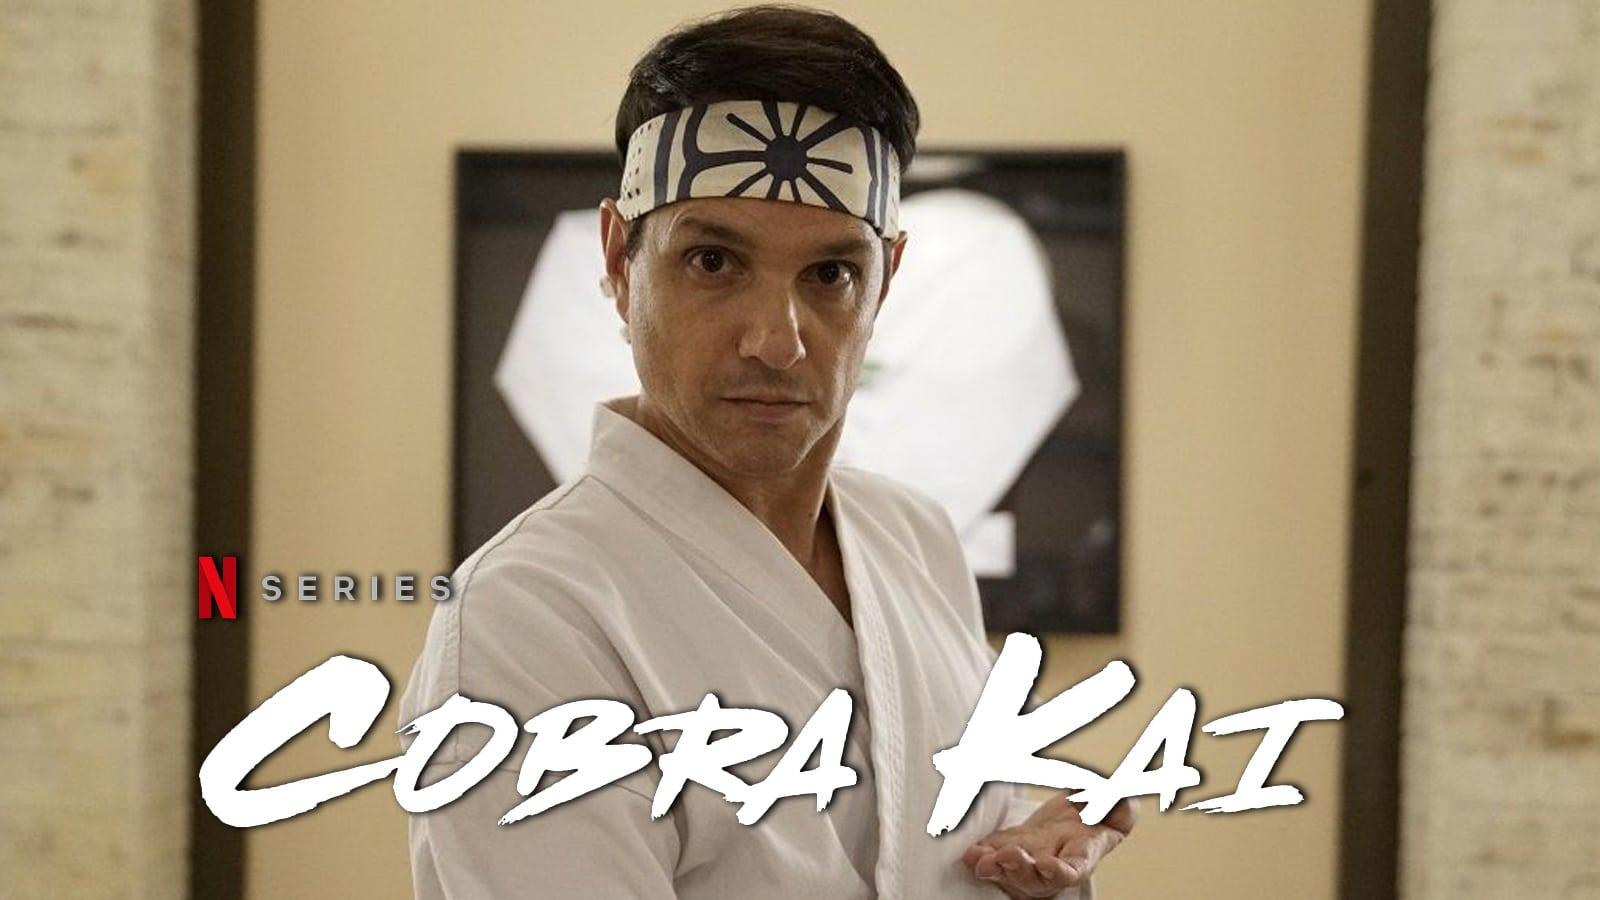 Cobra Kai season 6 potential release date, cast and more